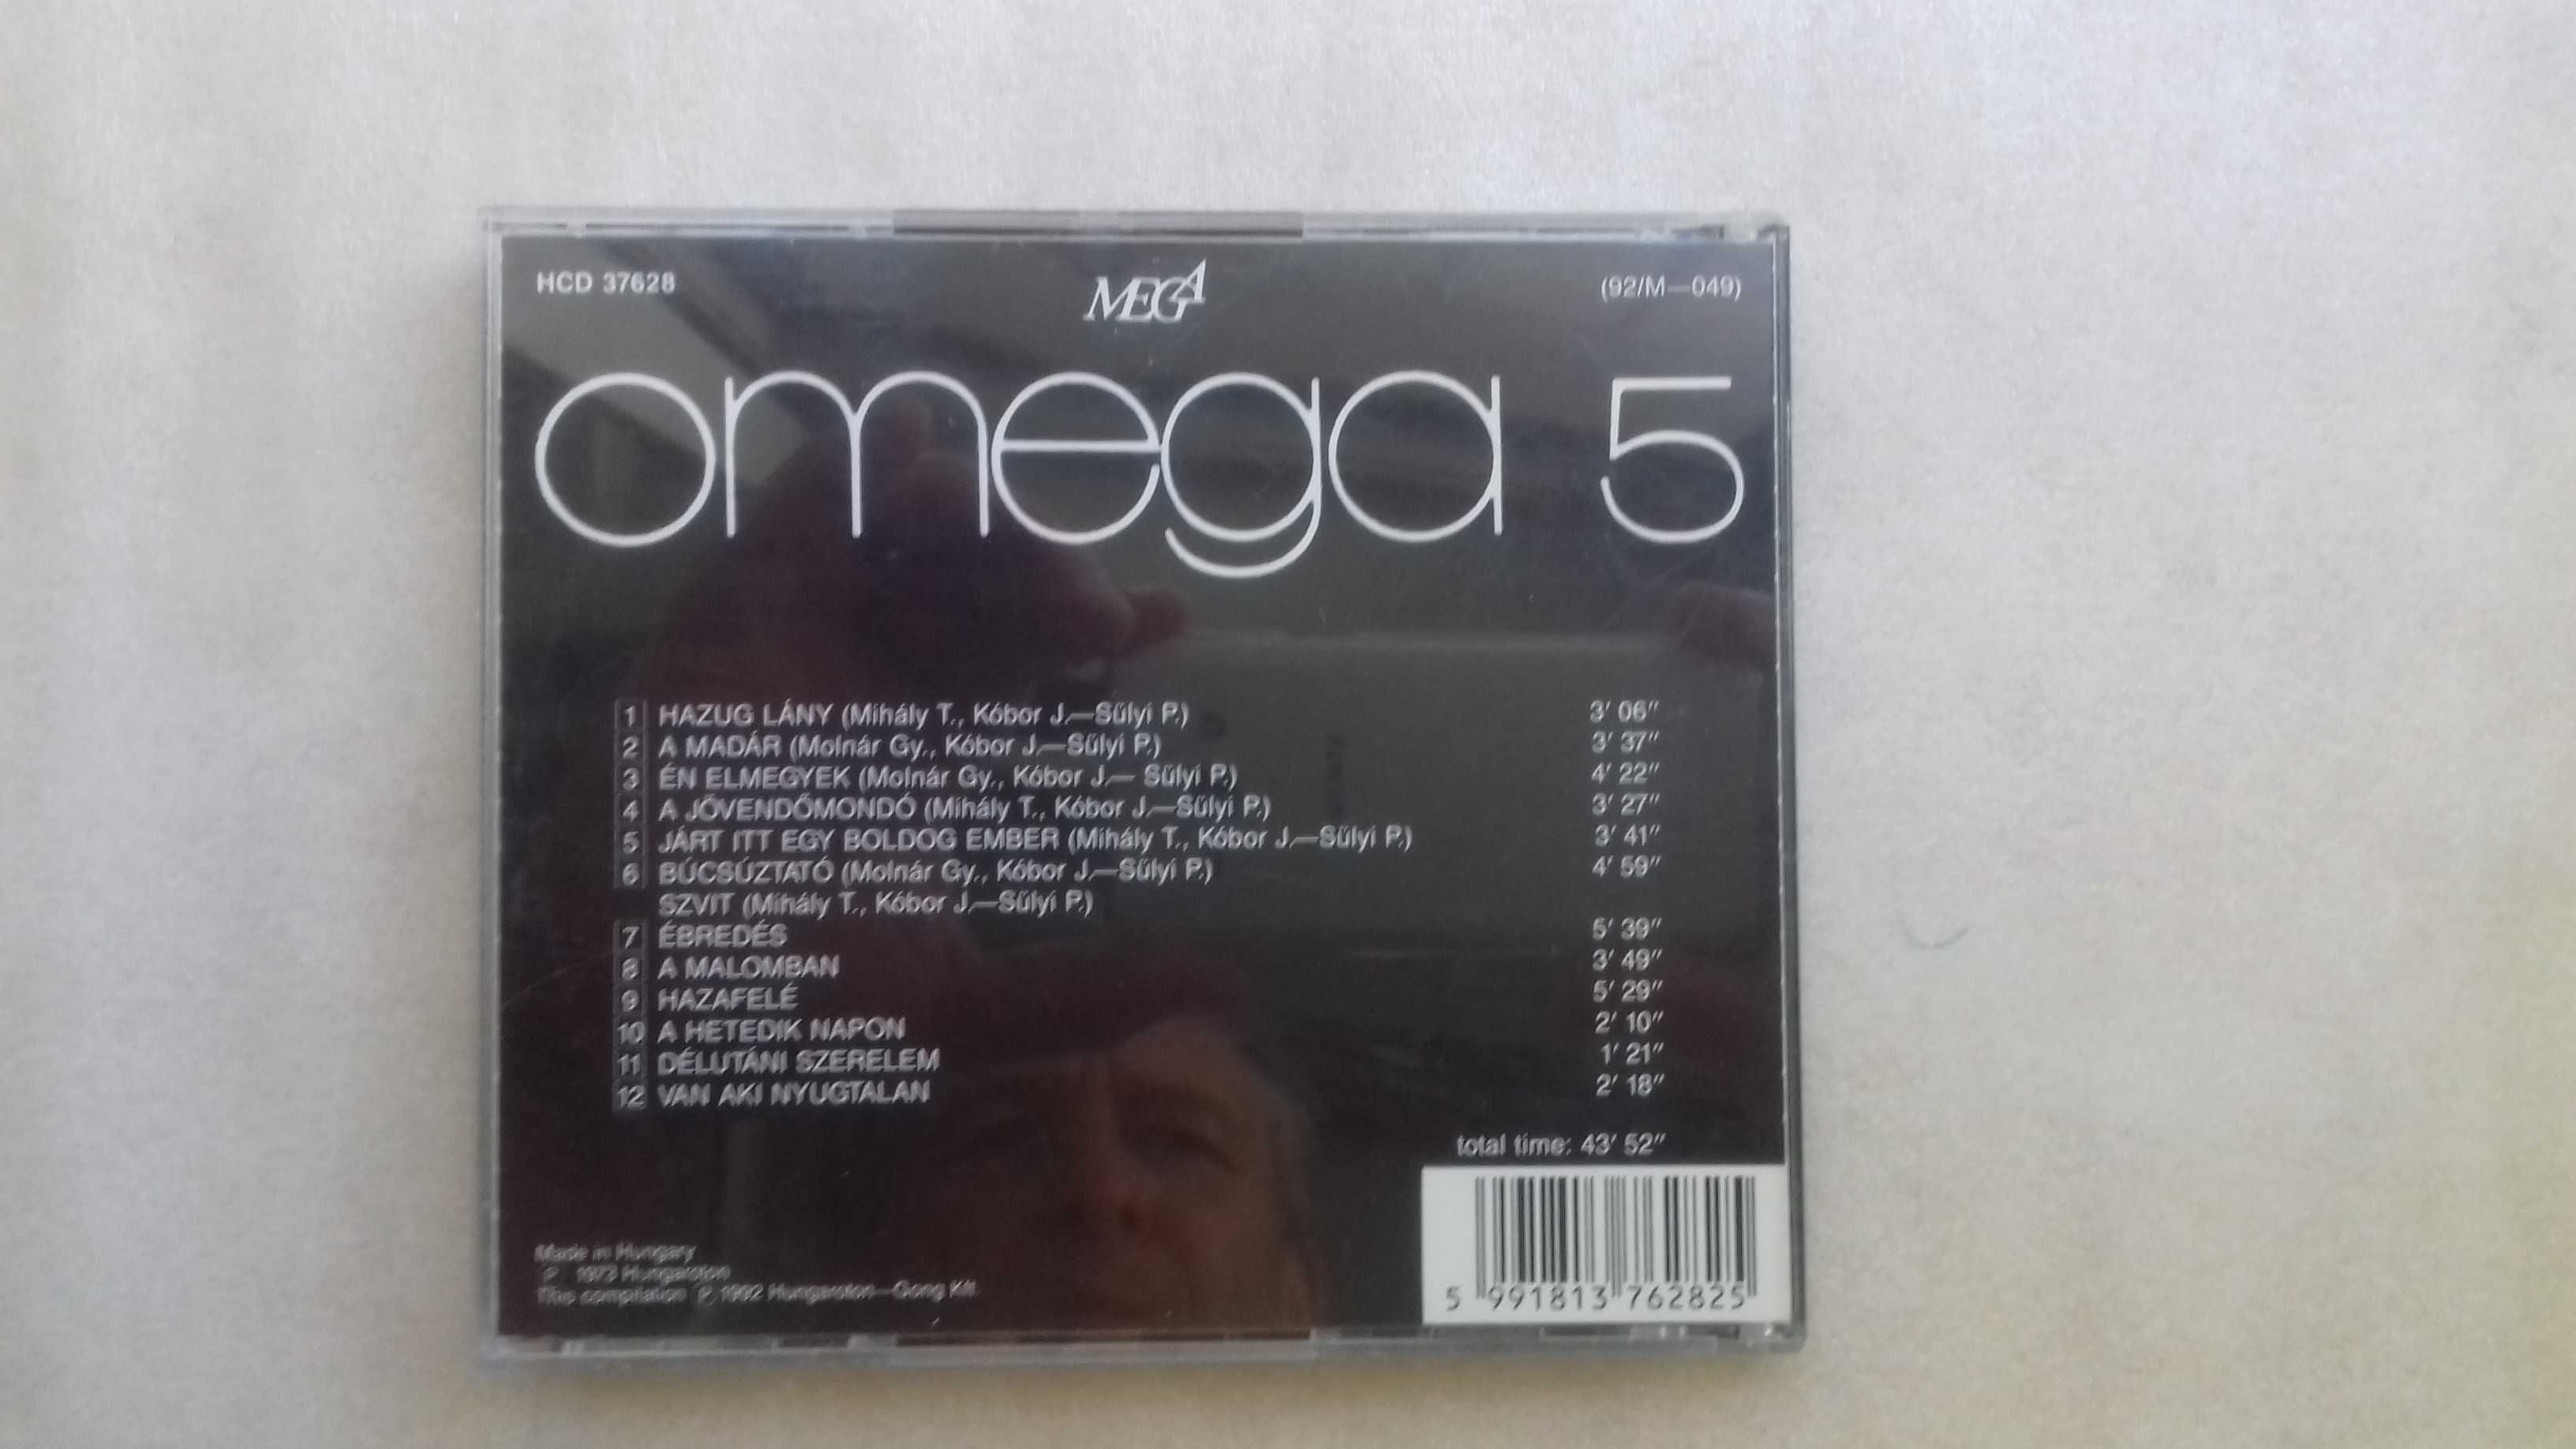 Omega 5 MEGA 92/M-049 IFPI Made in Hungary I wyd. CD